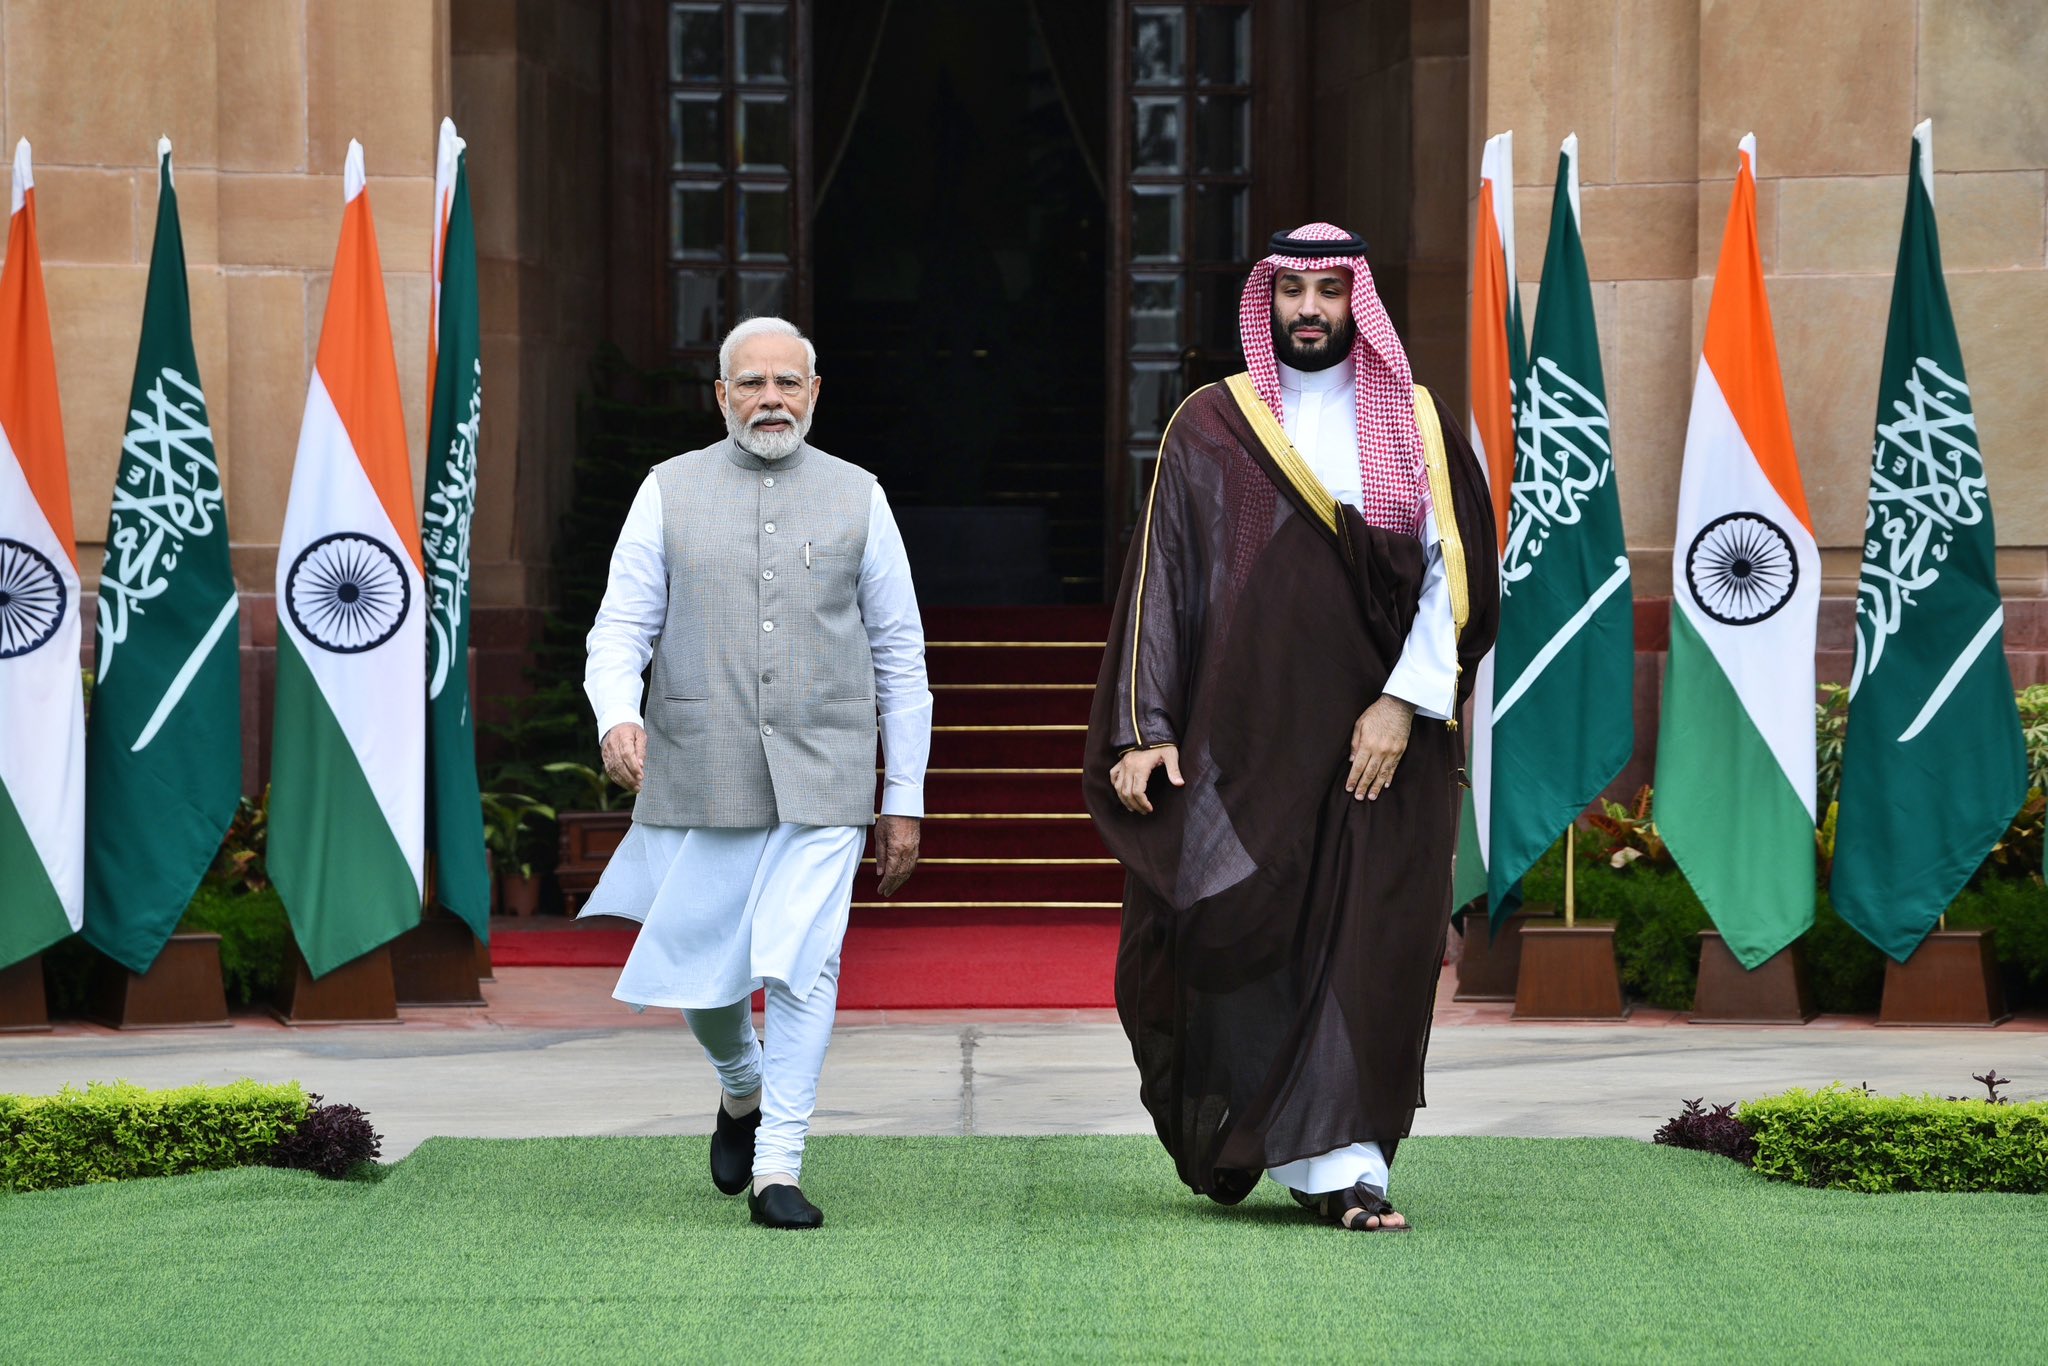 India-Saudi